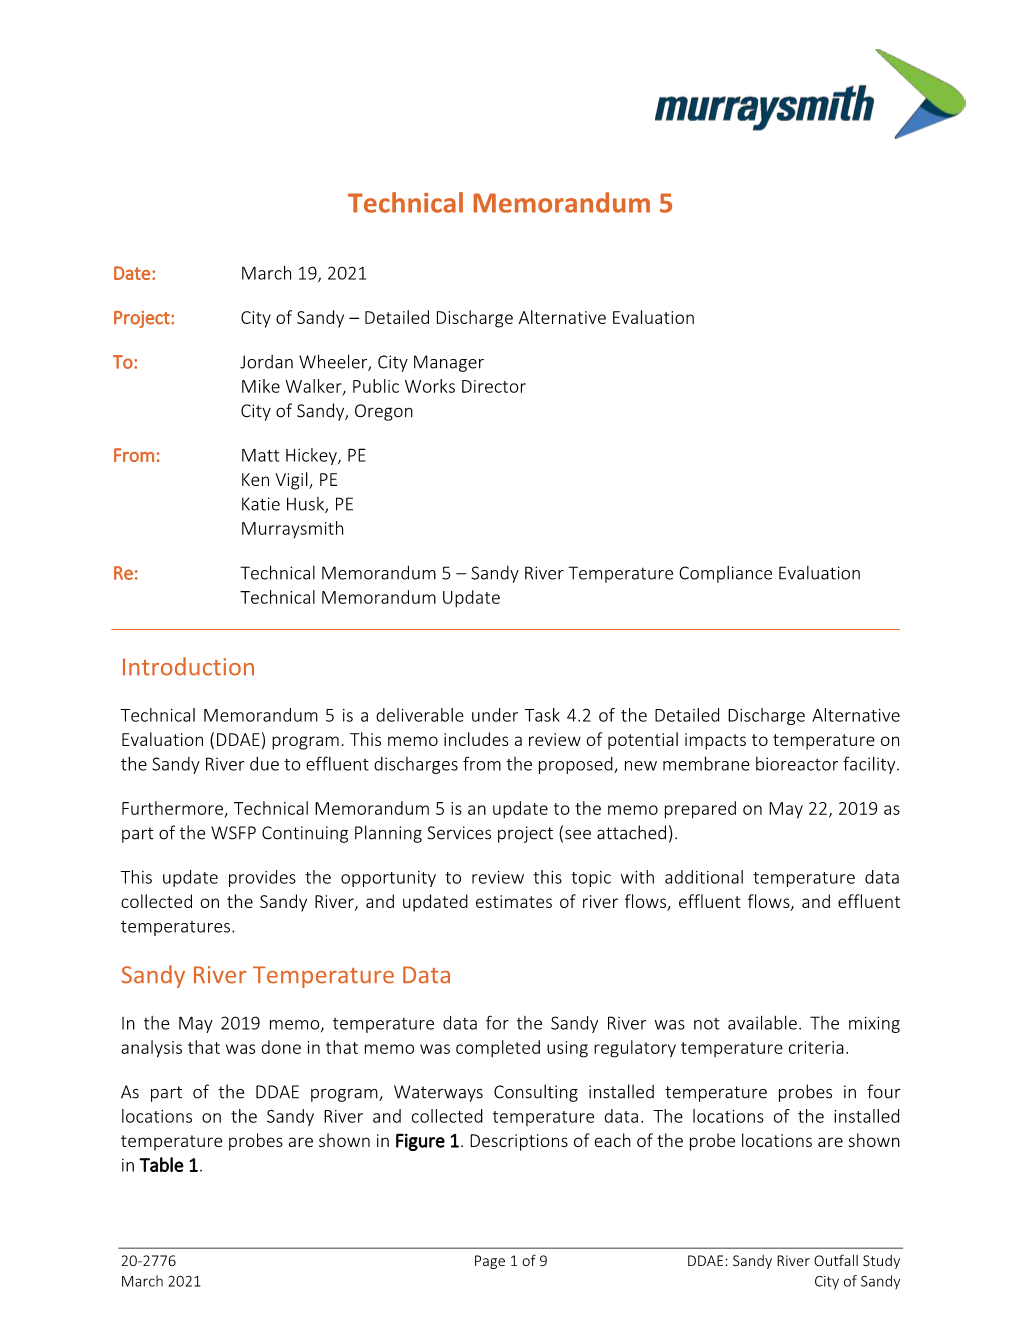 Sandy River Temperature Compliance Evaluation Technical Memorandum Update